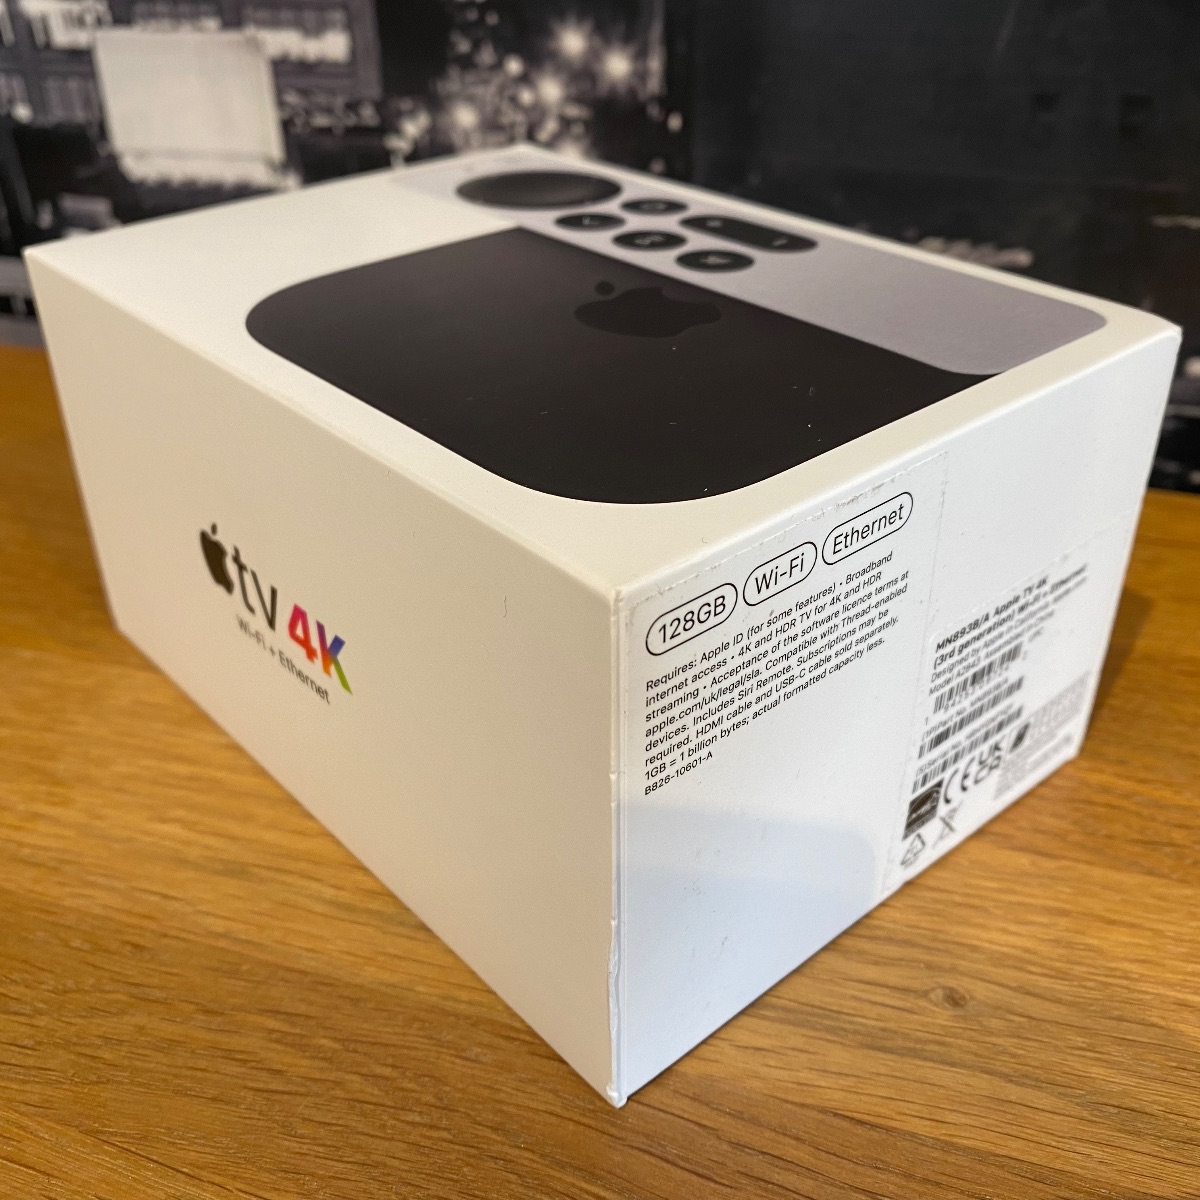 Apple Apple TV 4K 128GB TV 4K Smart Box WiFi Netflix BBC iPlayer Black Boxed MN893BA 194253097242 (Brand New)